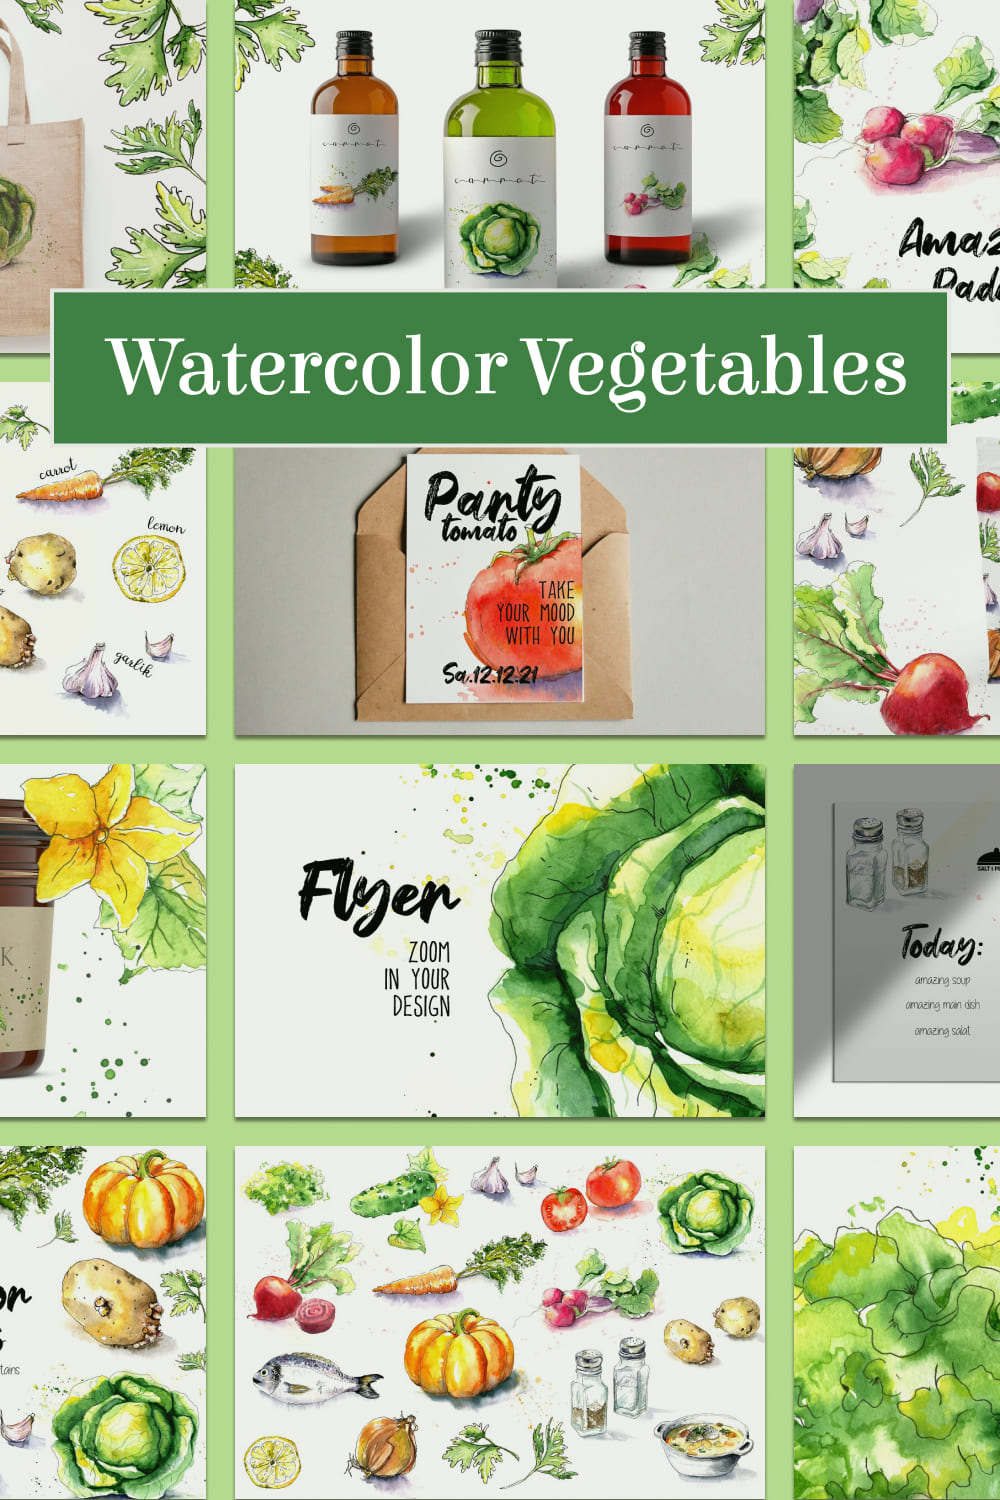 Watercolor vegetables - Pinterest image preview.